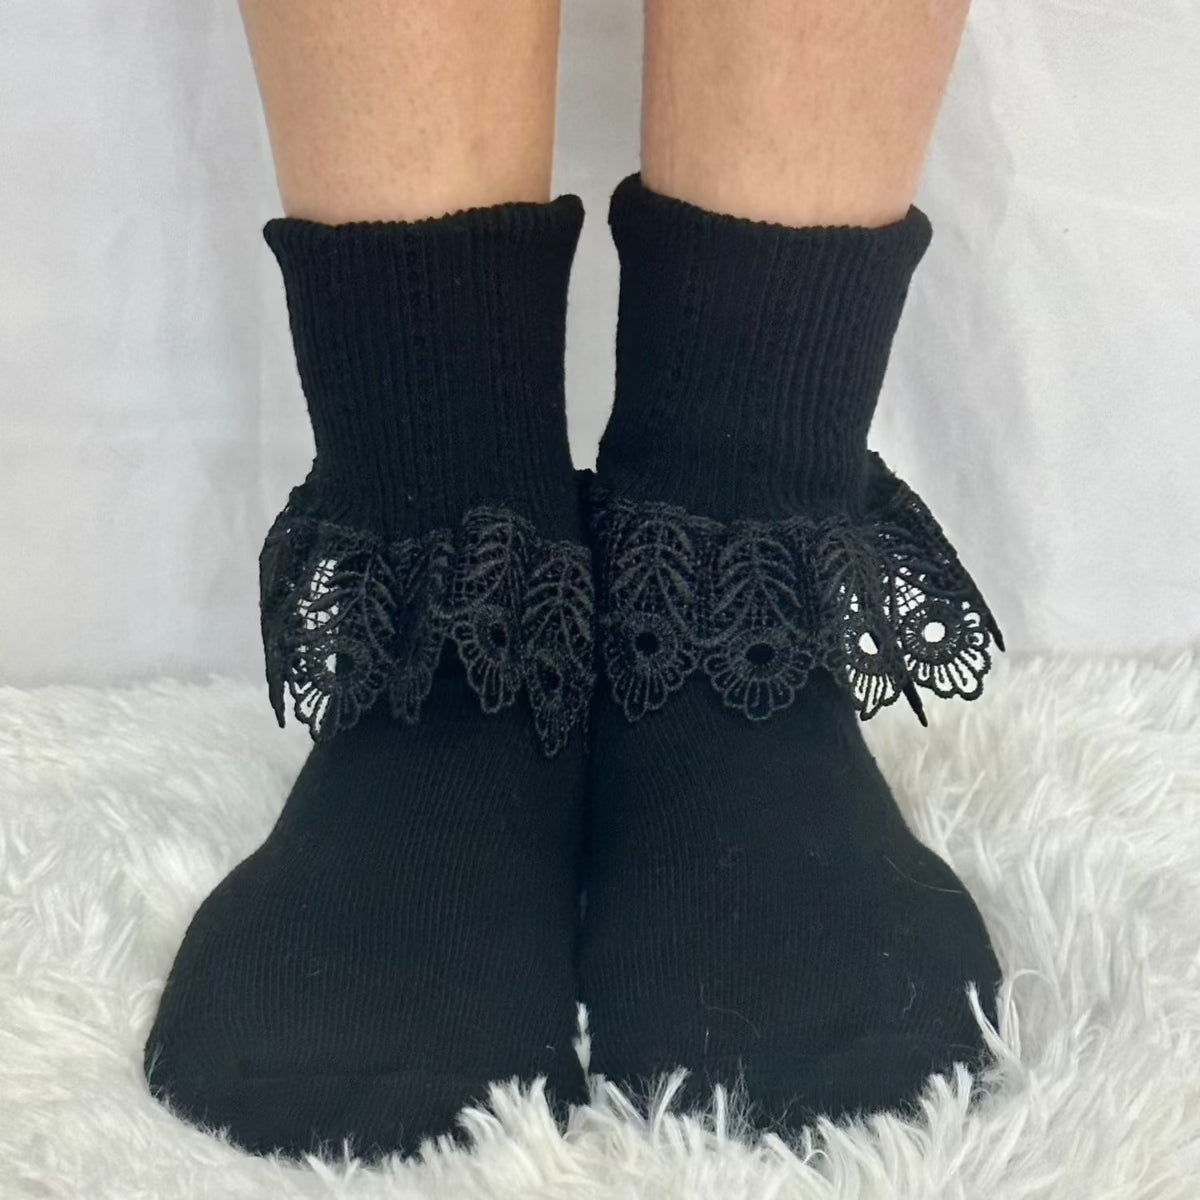 signature BLOSSOM  lace ankle cuff socks women - black, Lace cuff socks women's, best quality lace trim socks.